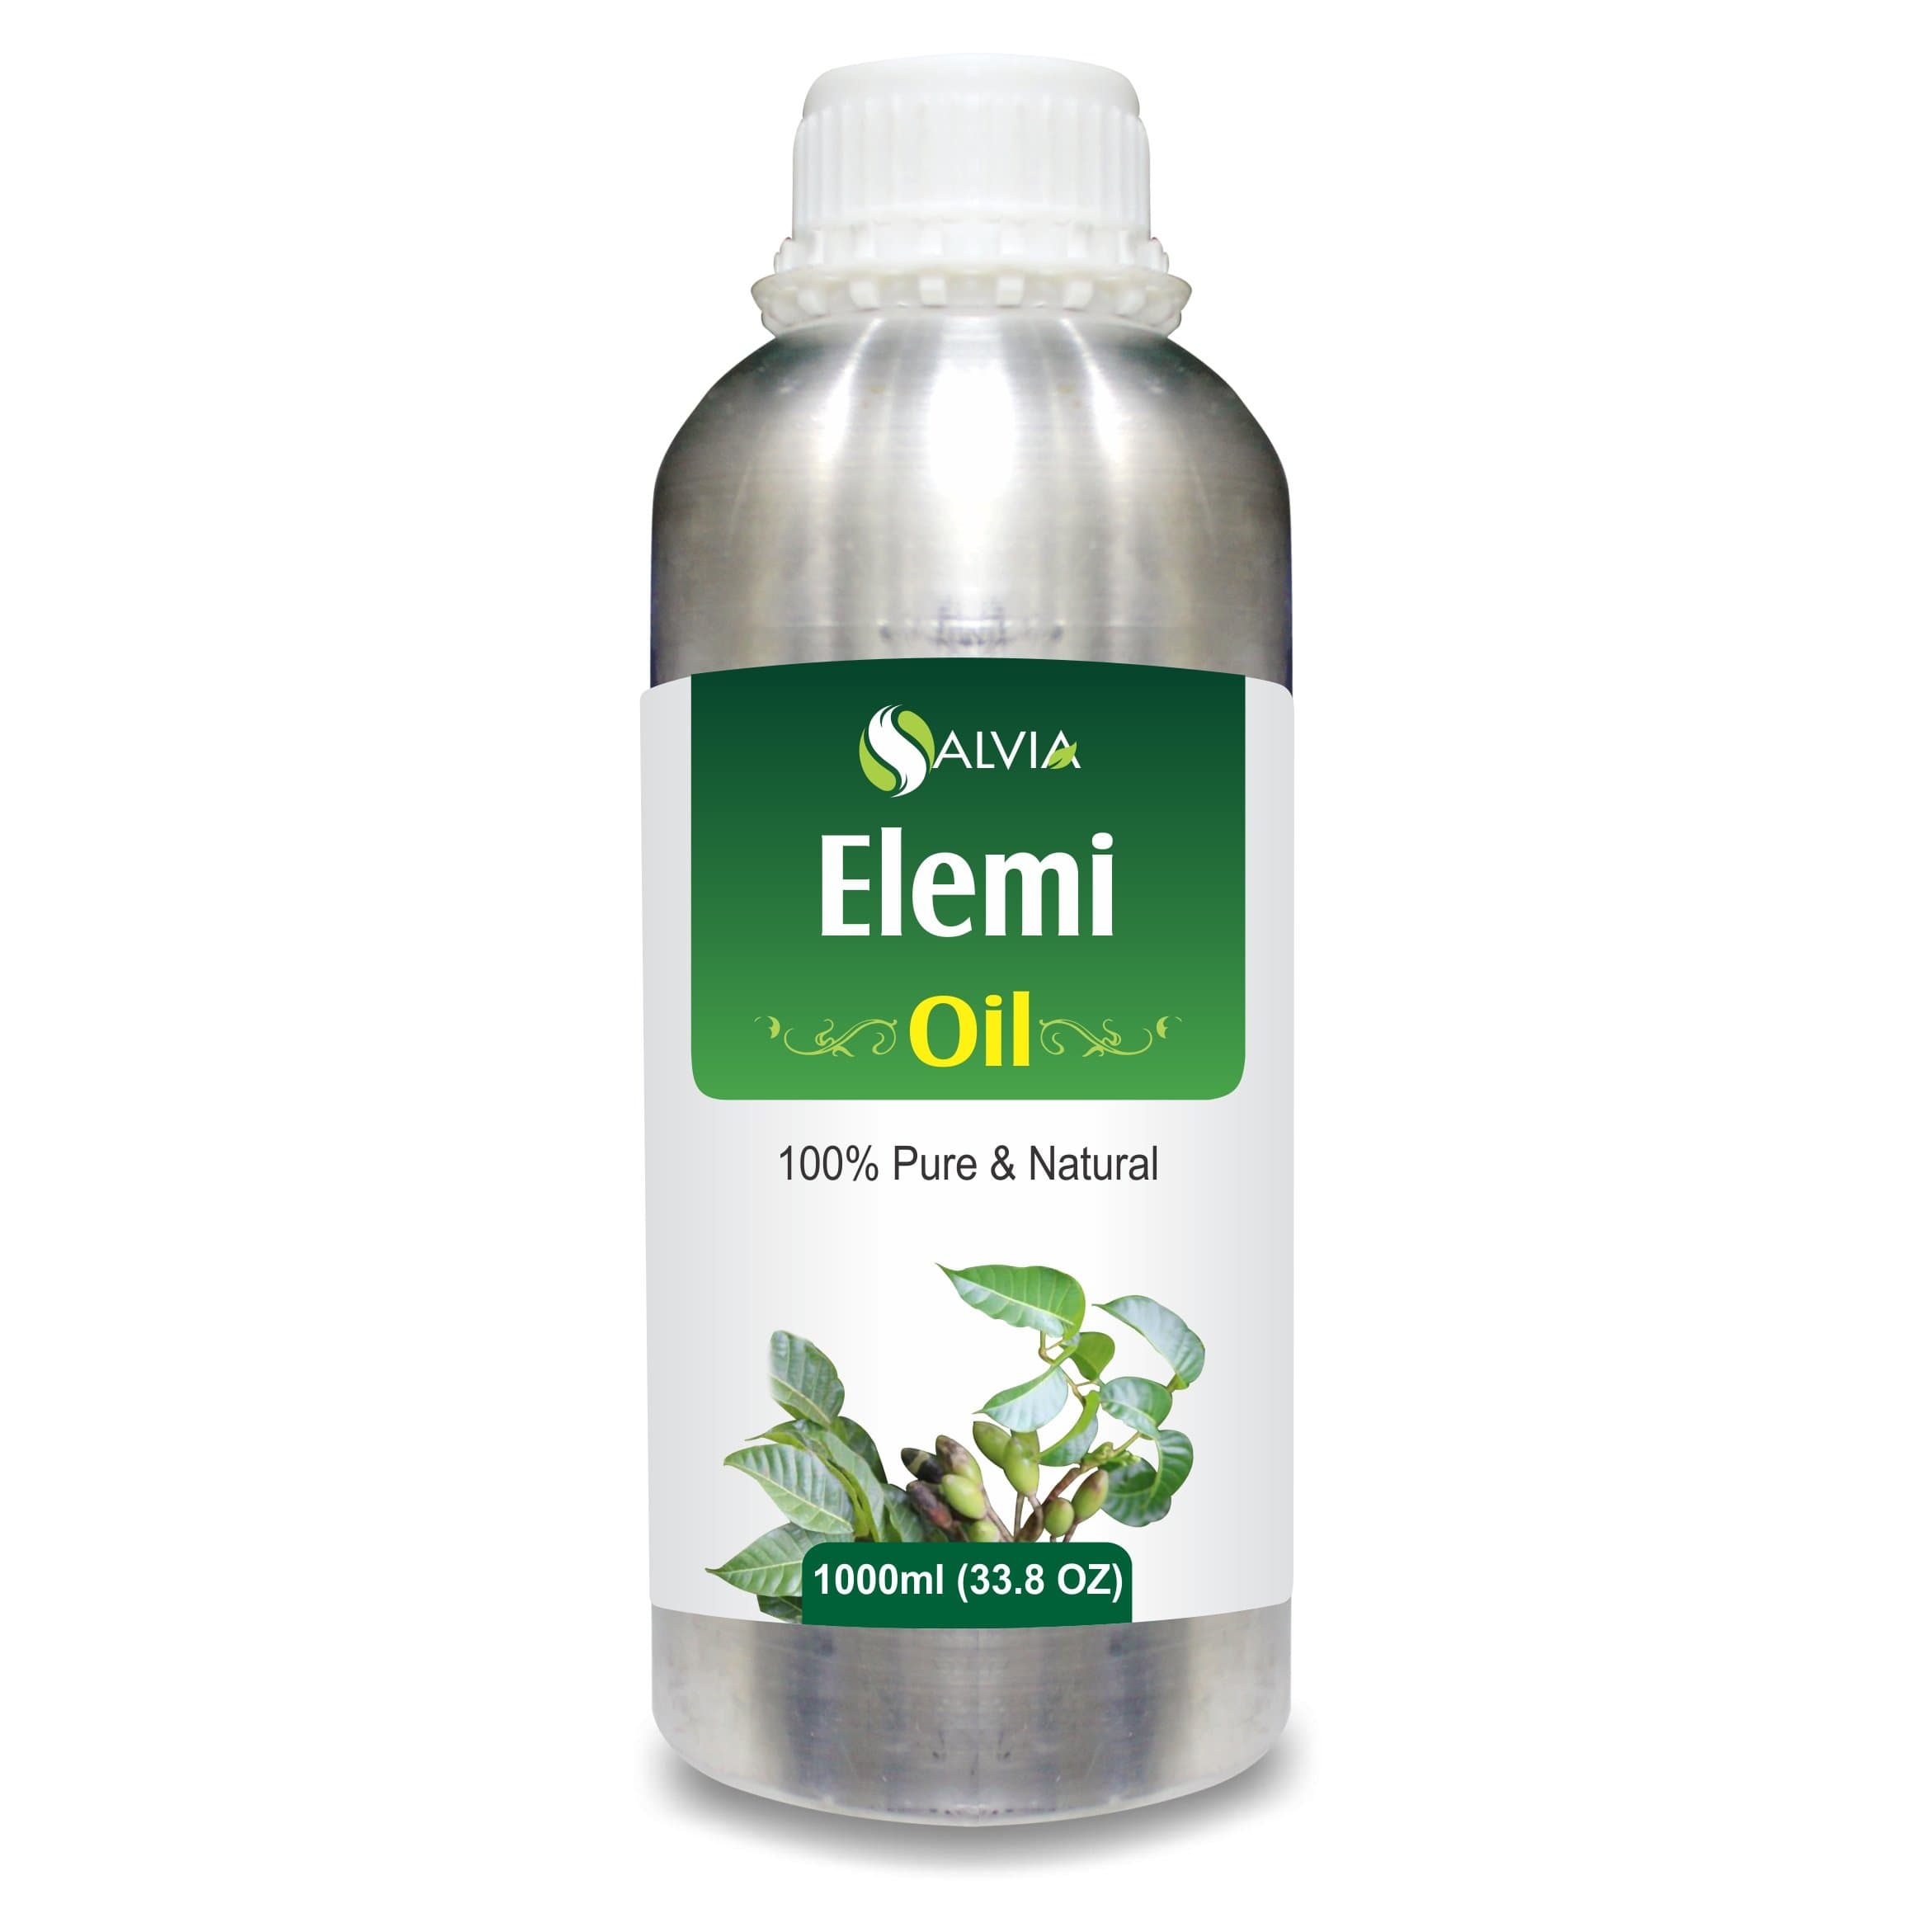 elemi essential oil for skin care